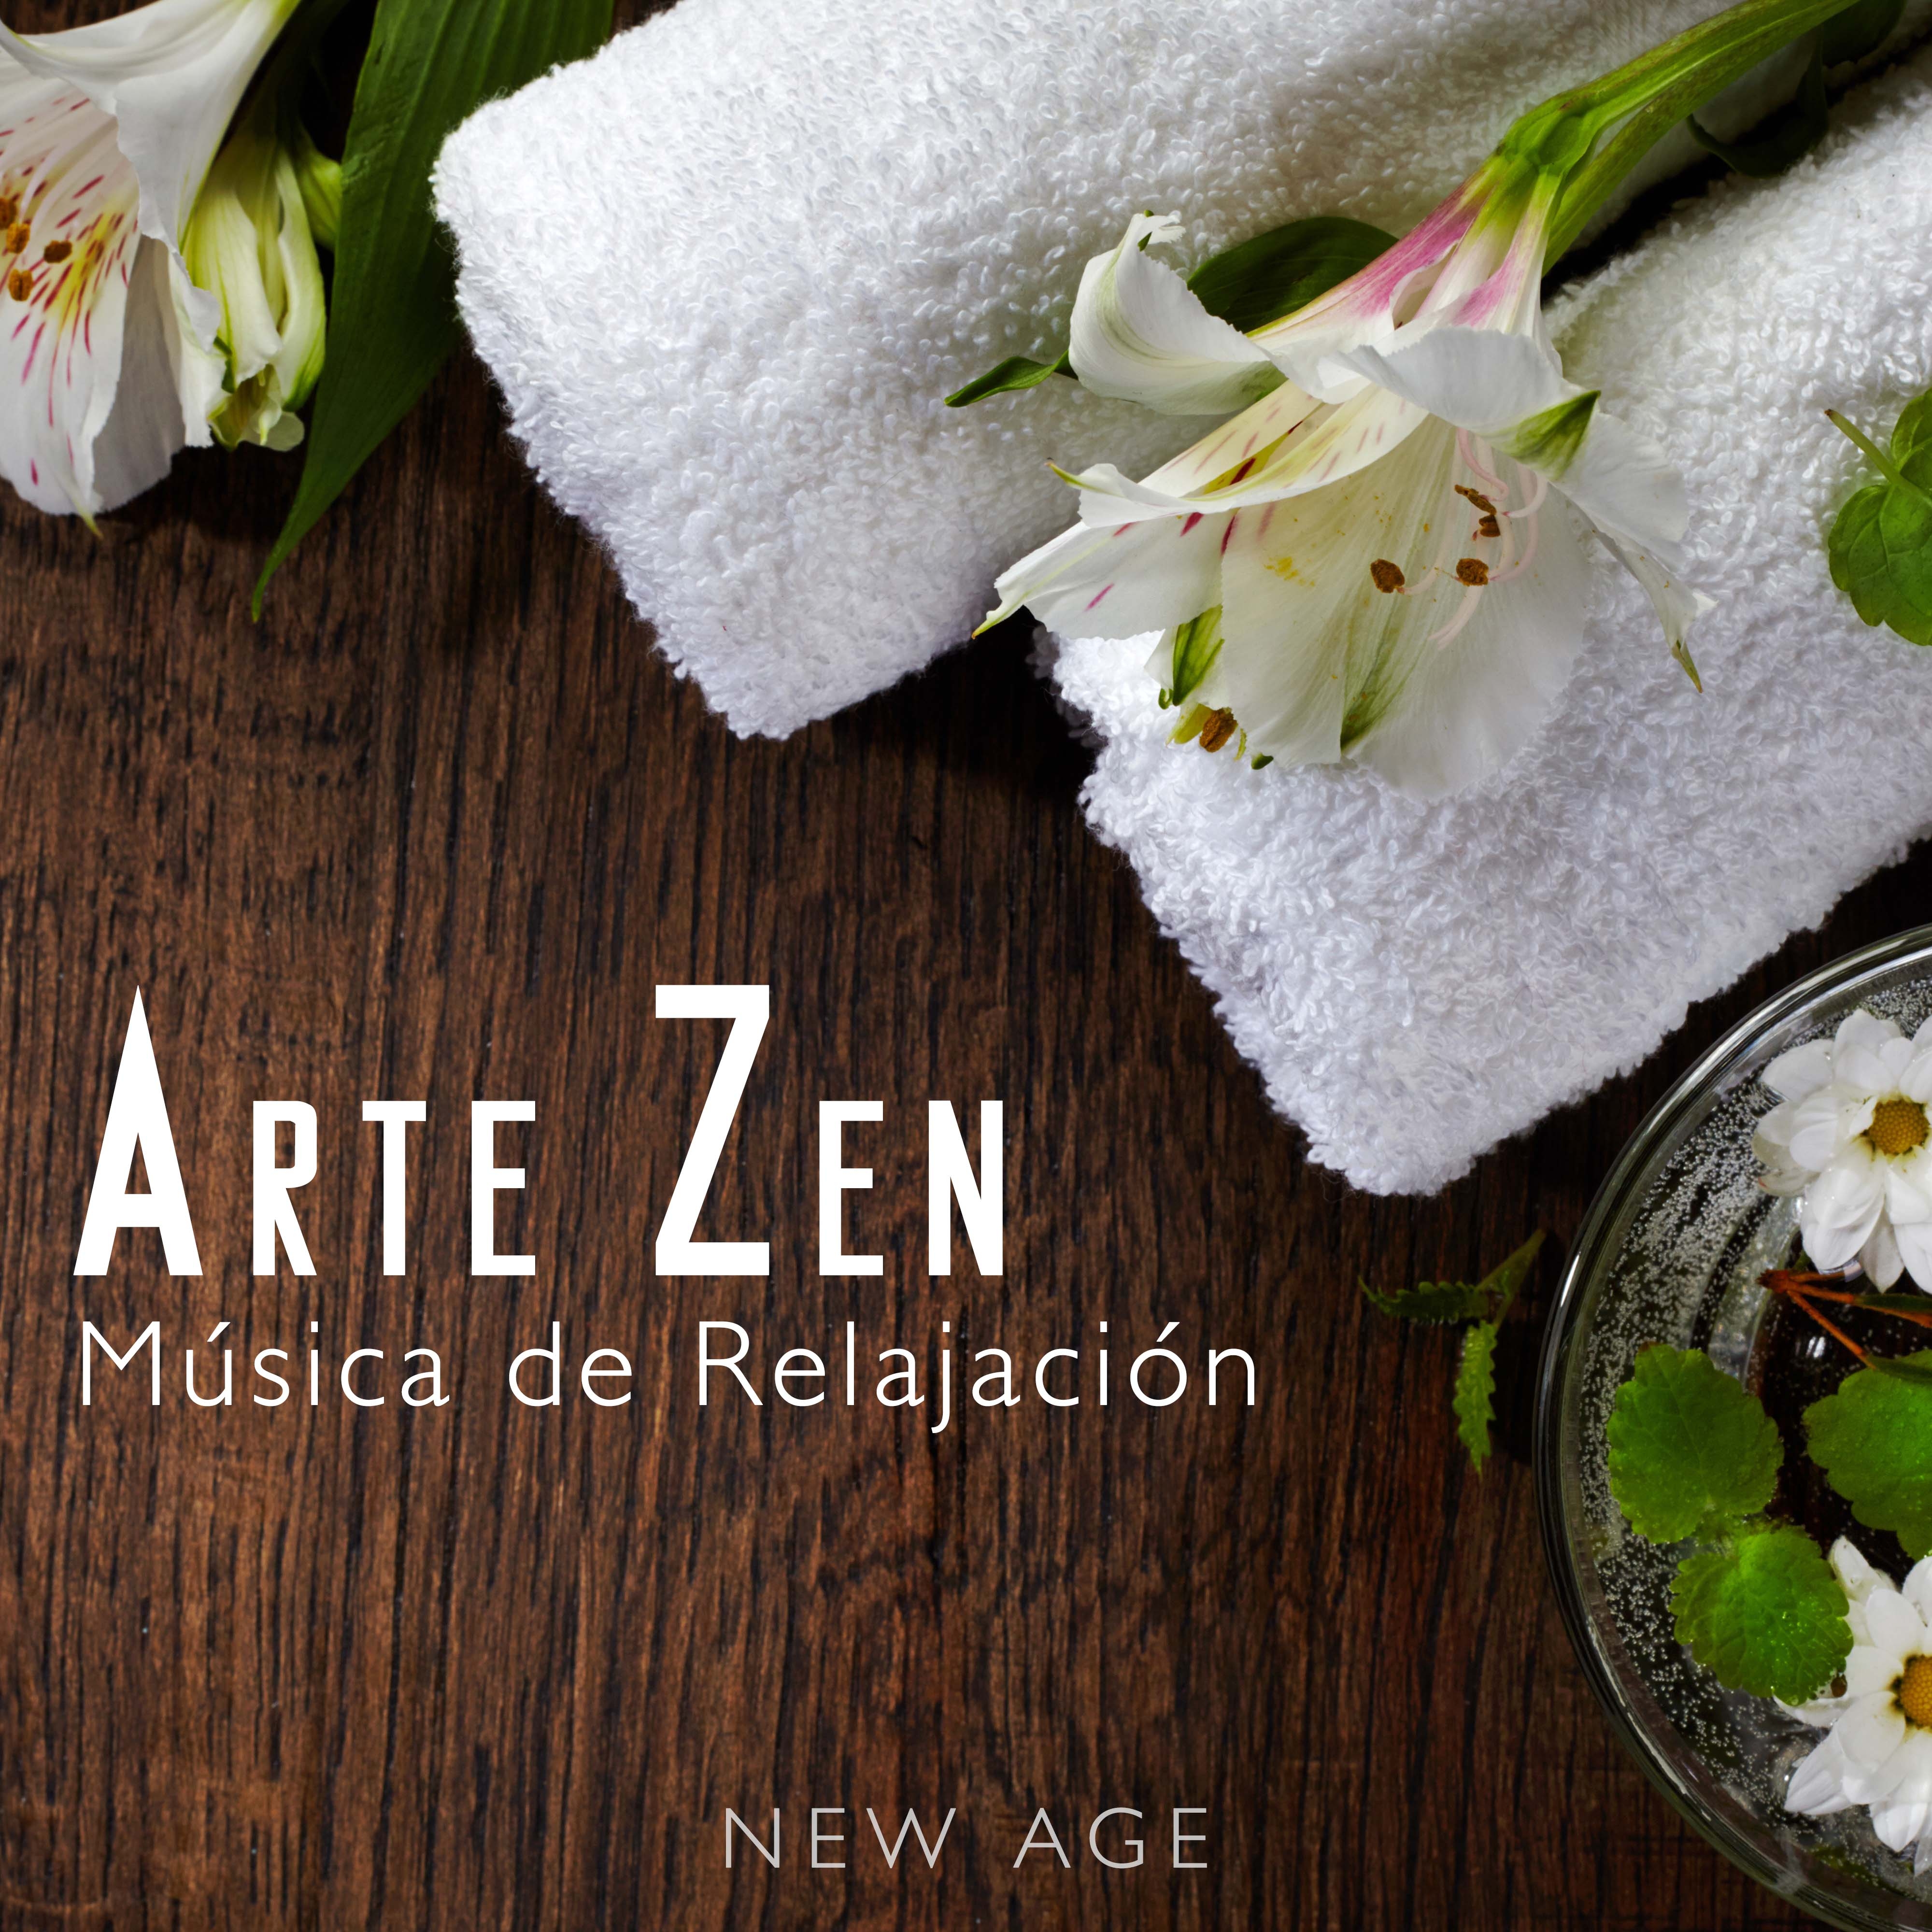 Arte Zen - Musica de Relajacion New Age